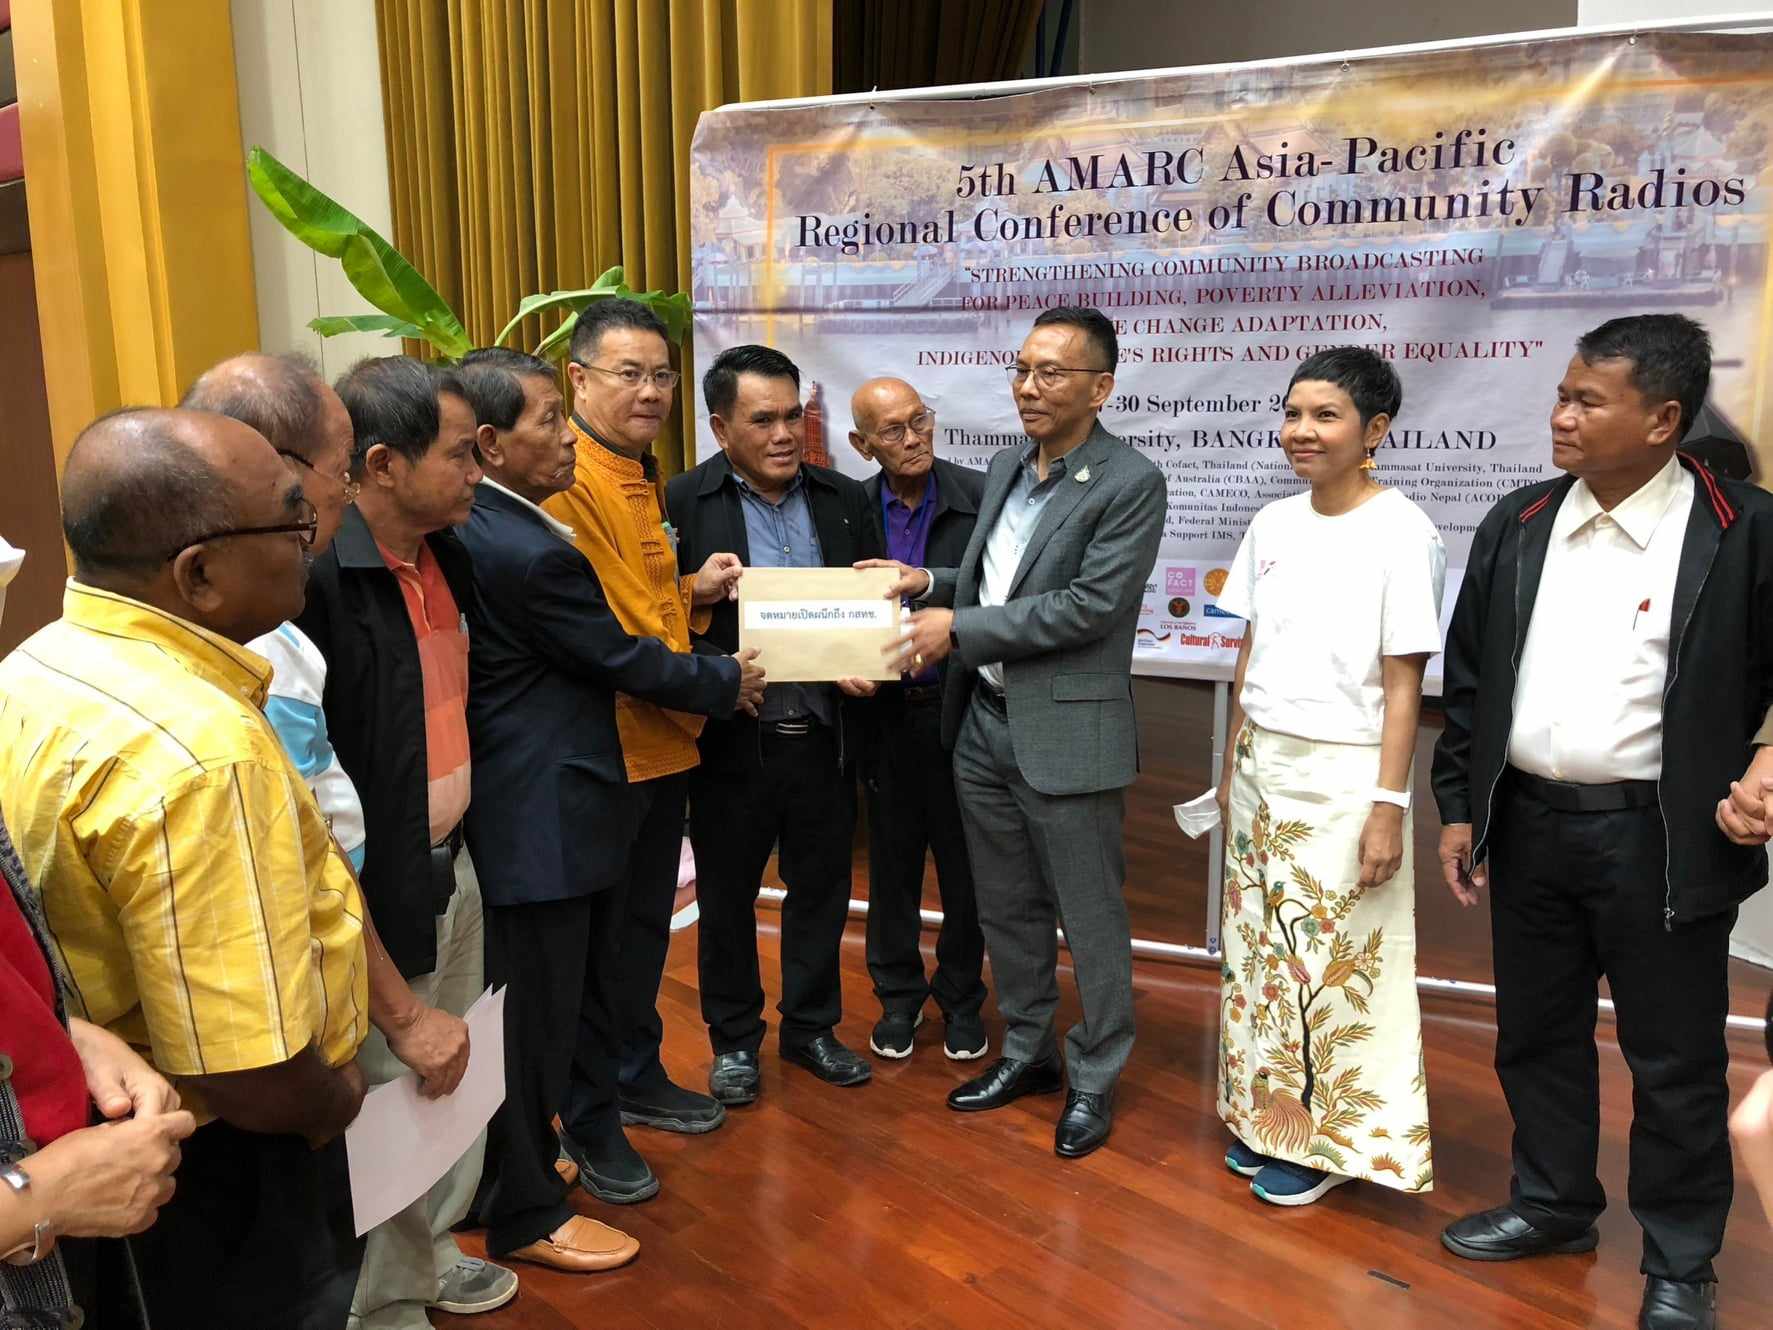 MAP Radio ได้เข้าร่วมประชุมวิทยุชุมชน AMARC Asia Pacific Regional Conference of Community Radio